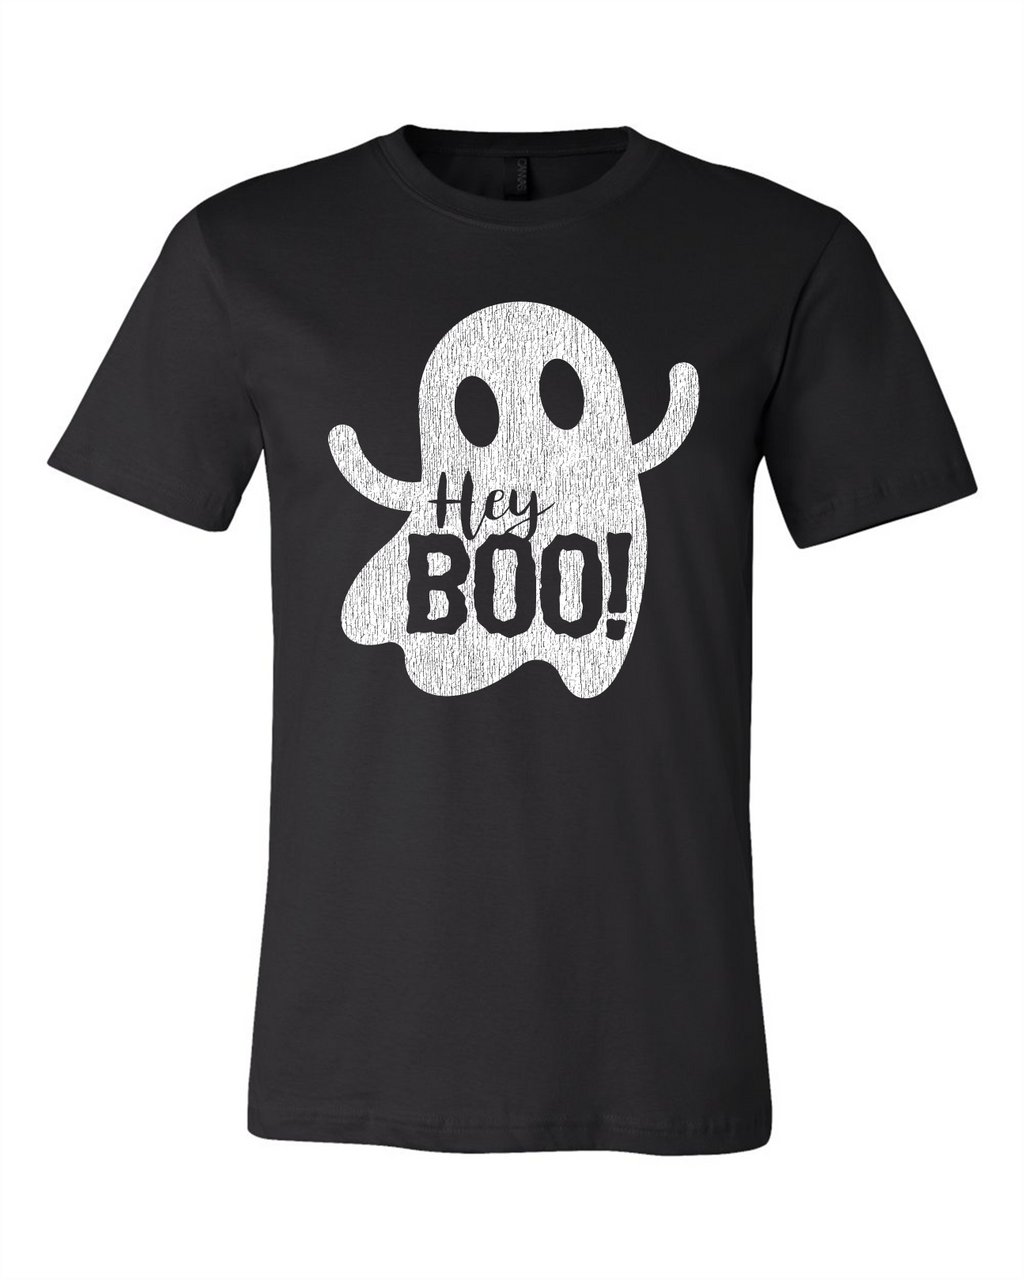 hey boo! ghost tee in black